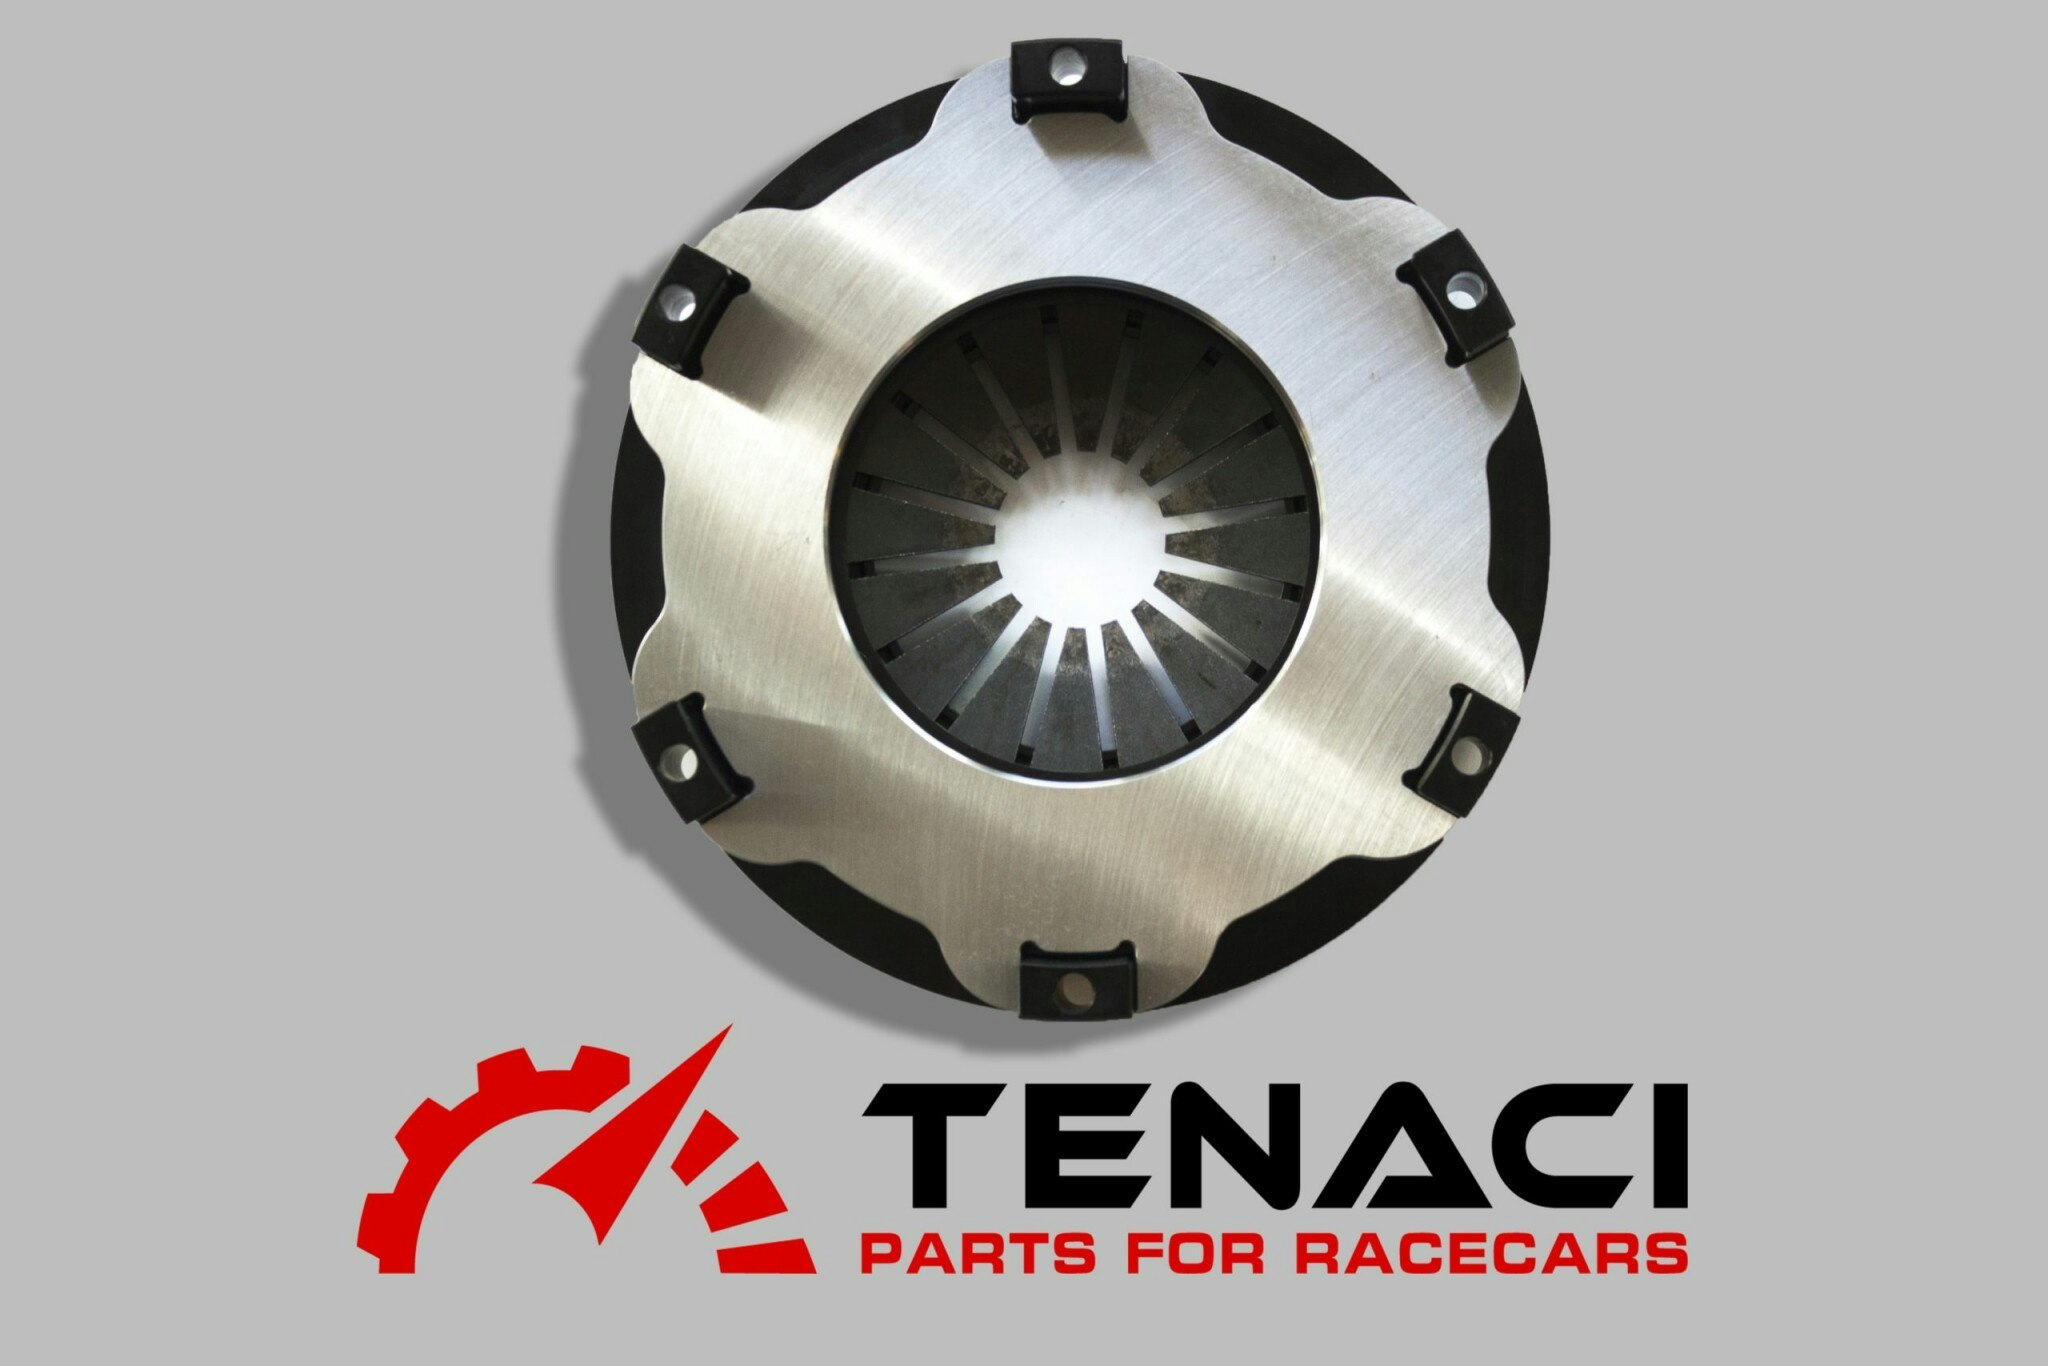 Tenaci Rally Clutch 184 mm 7;25" 3-disc 1650Nm